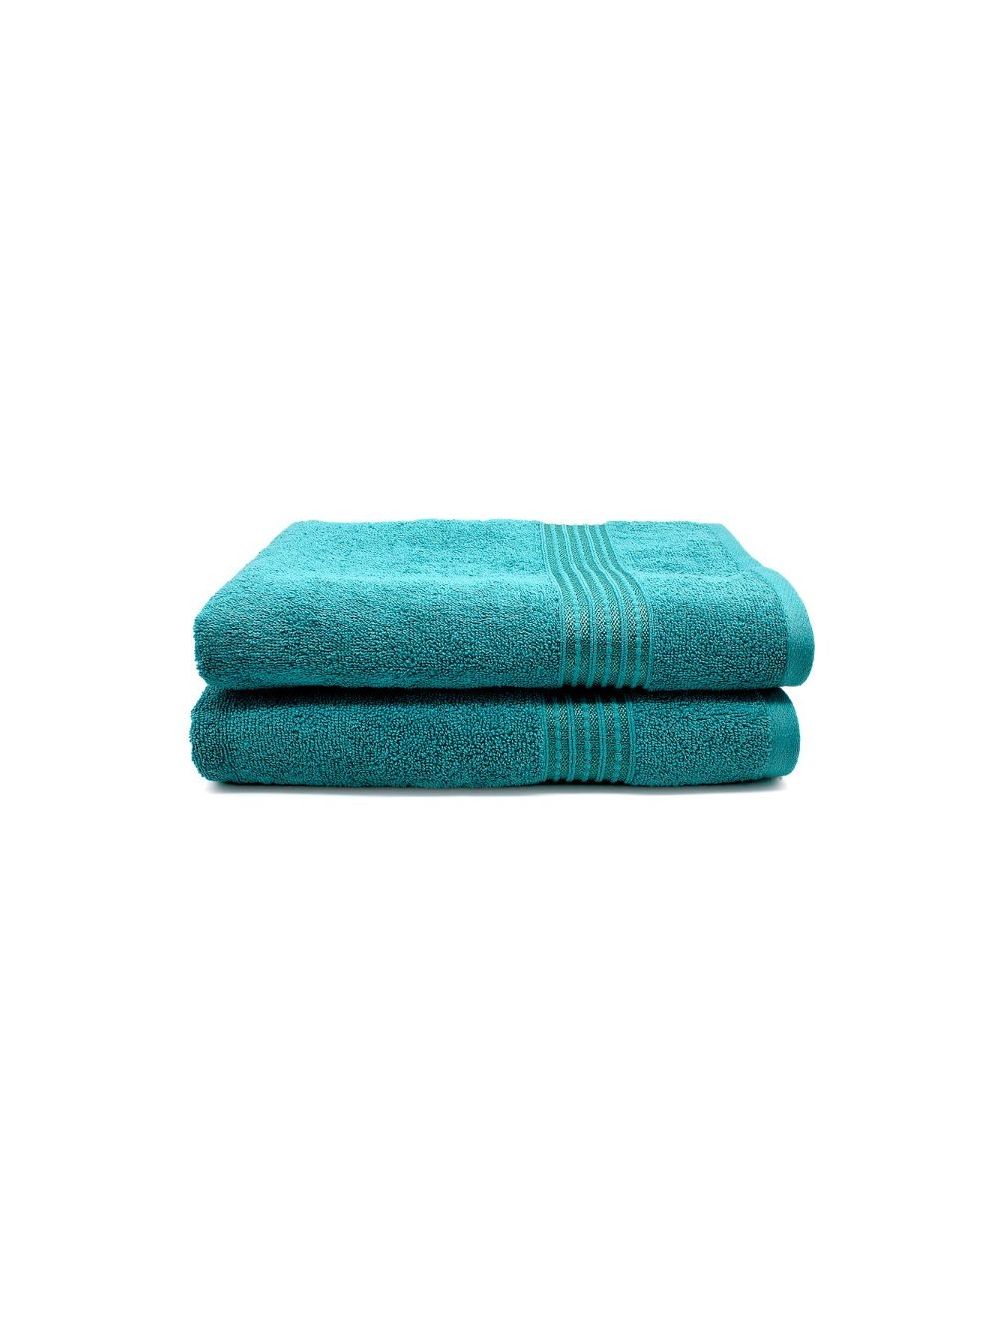 Rahalife 100% Cotton 2-Piece Bath Towel Set, Classic Collection, Sky Blue-14RLBT009